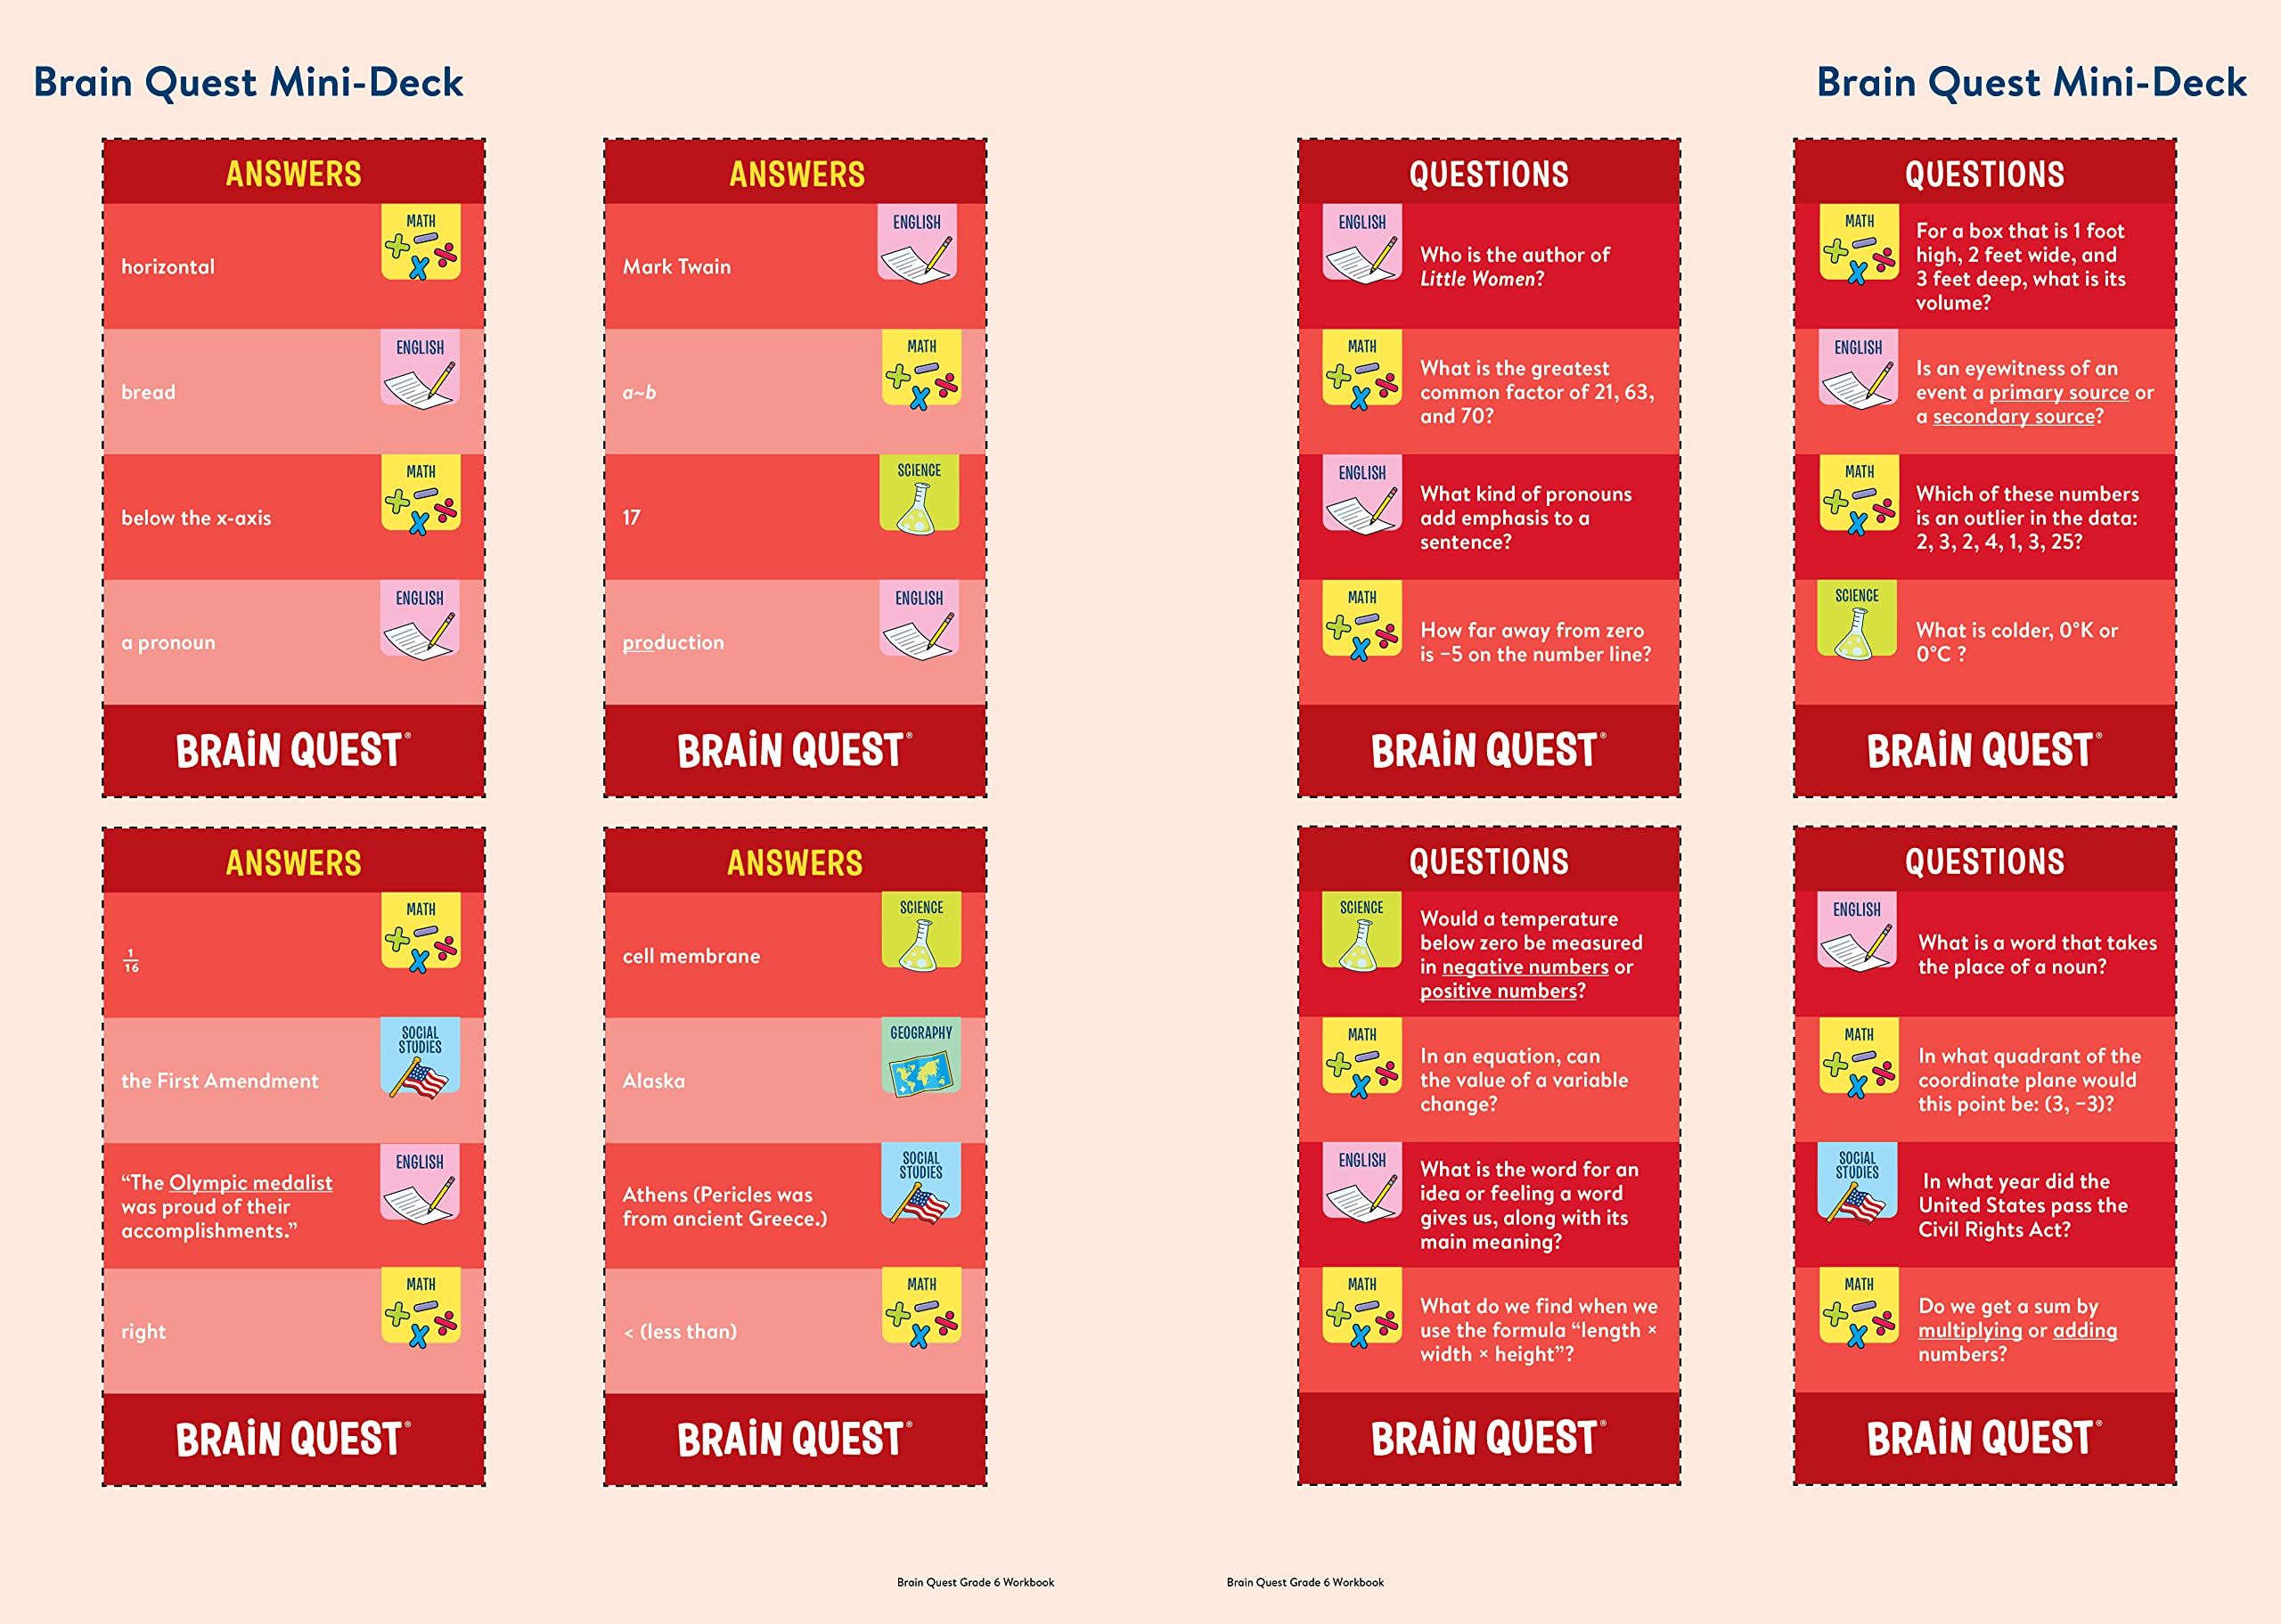 Brain Quest Workbook: 6th Grade (Revised Edition)